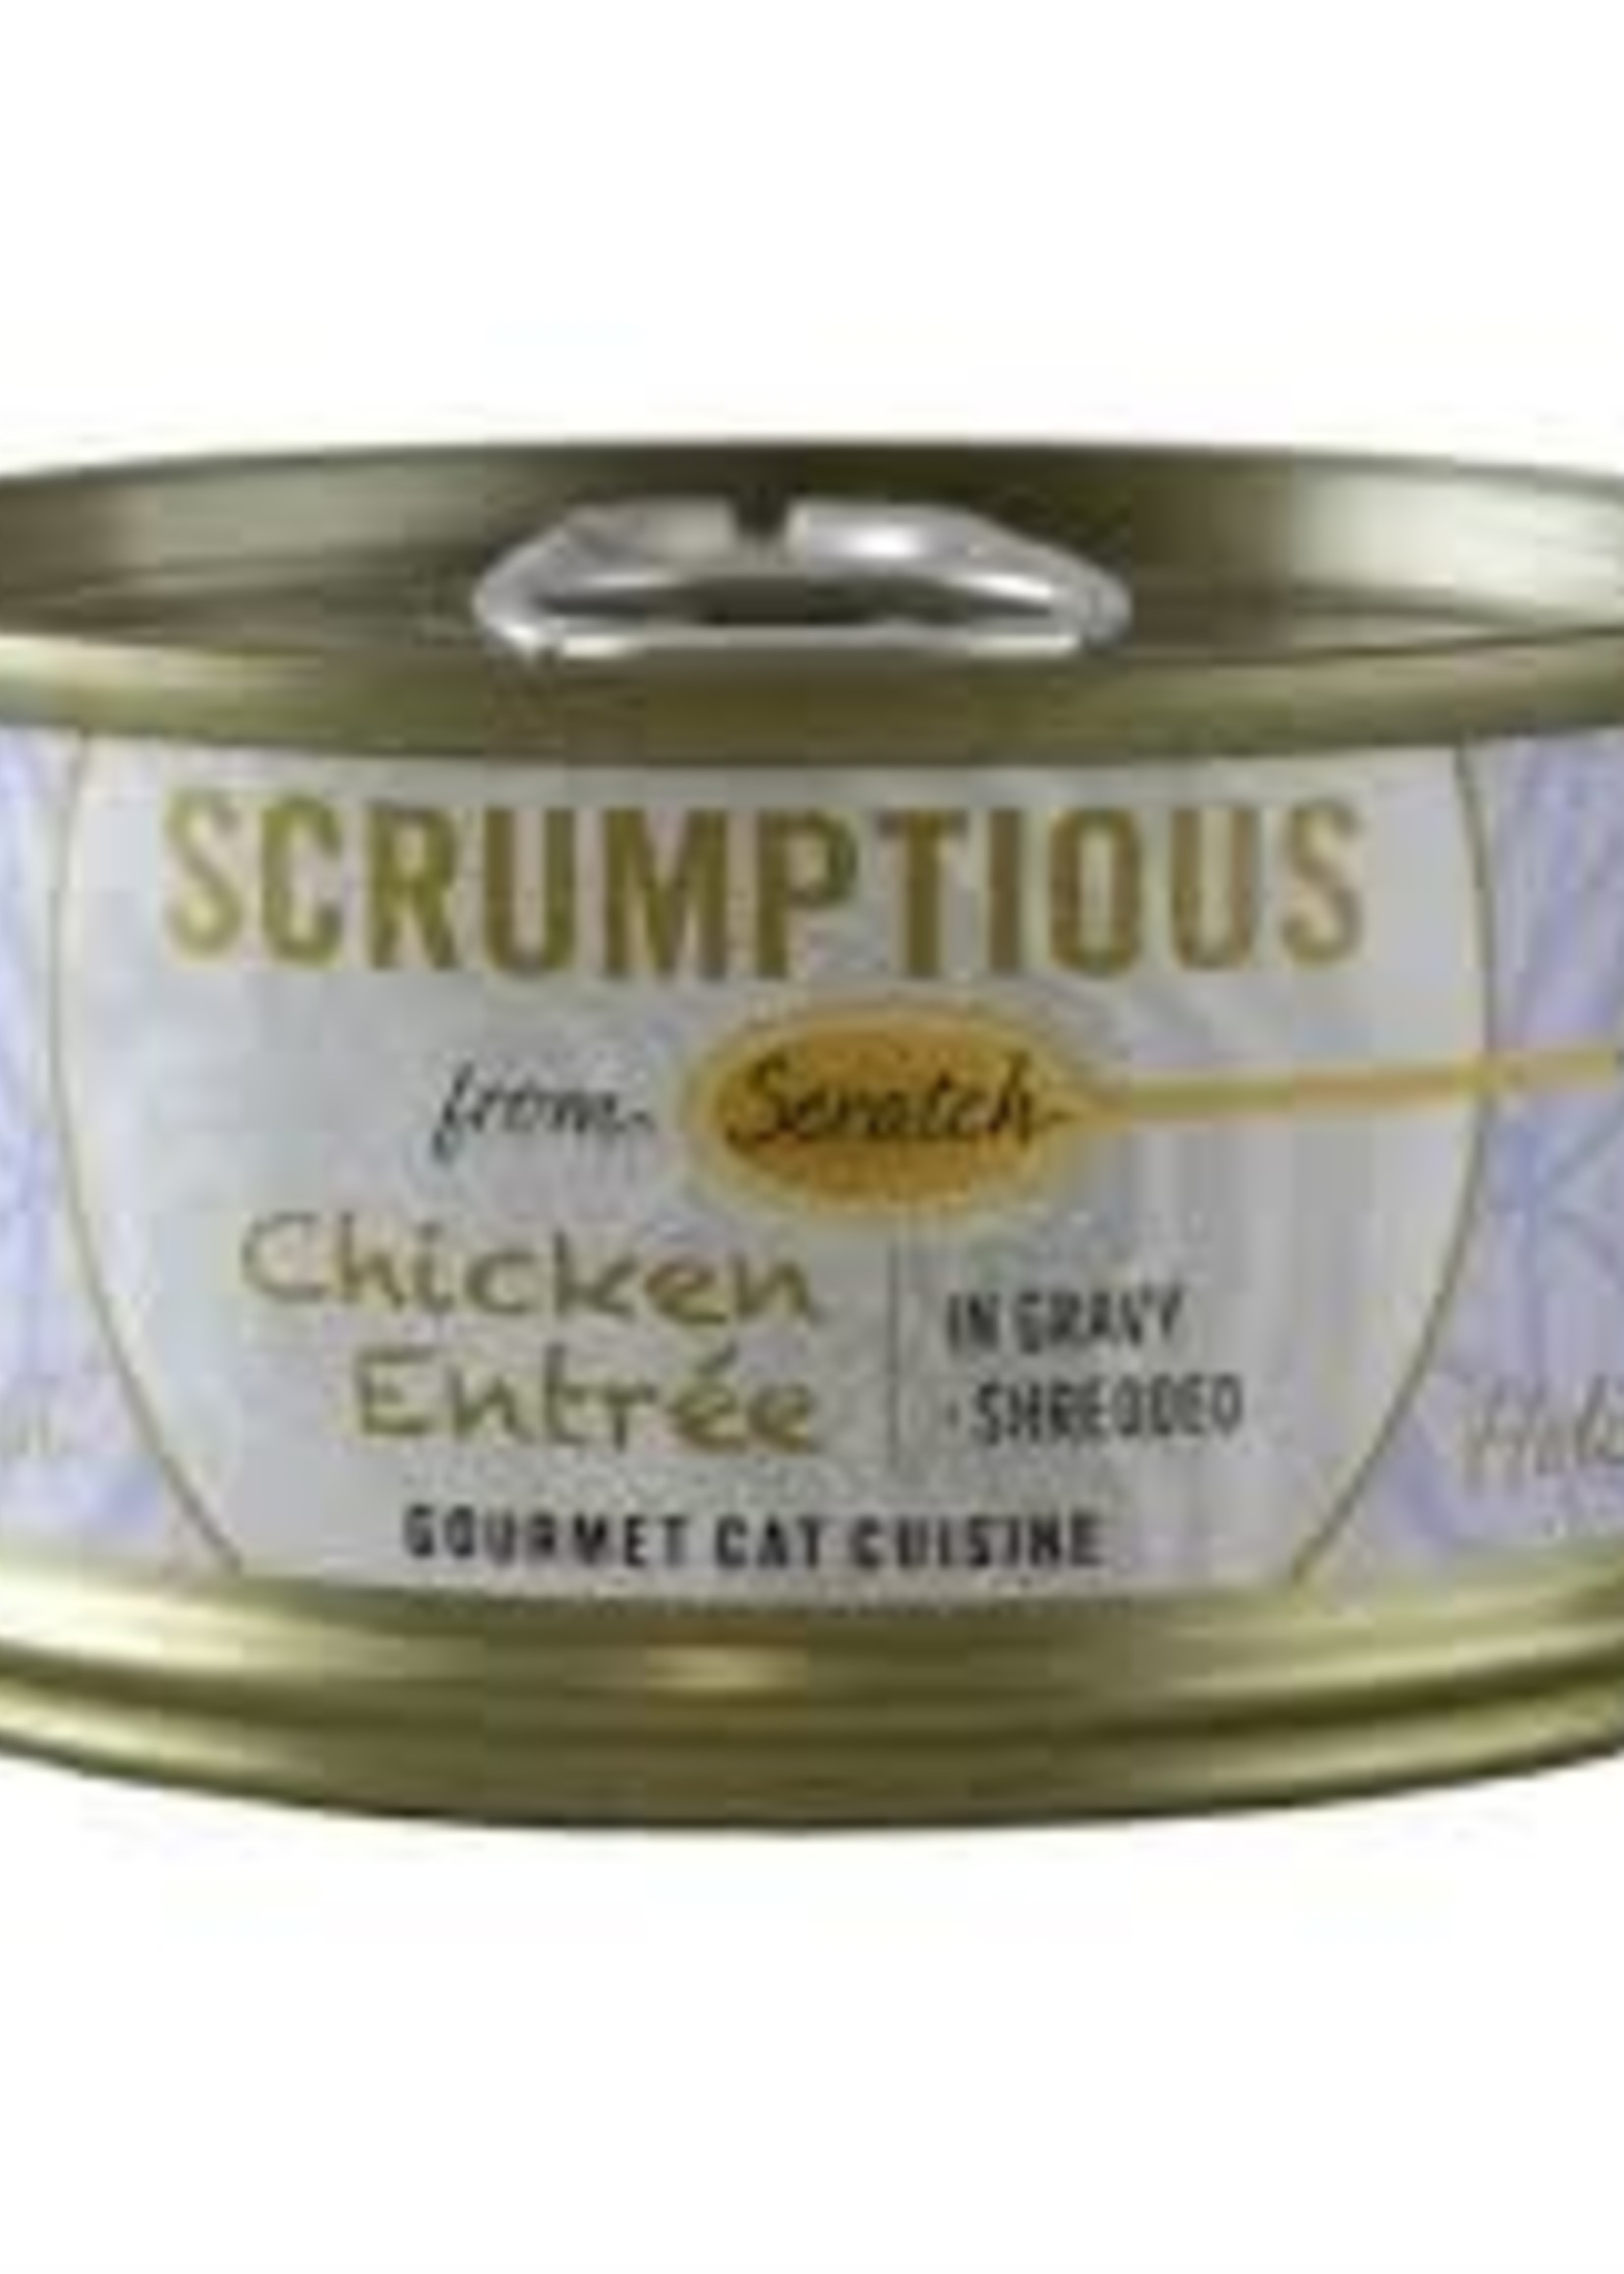 Scumptious Scrumptious Cat Food-Chicken Entree 2.8OZ